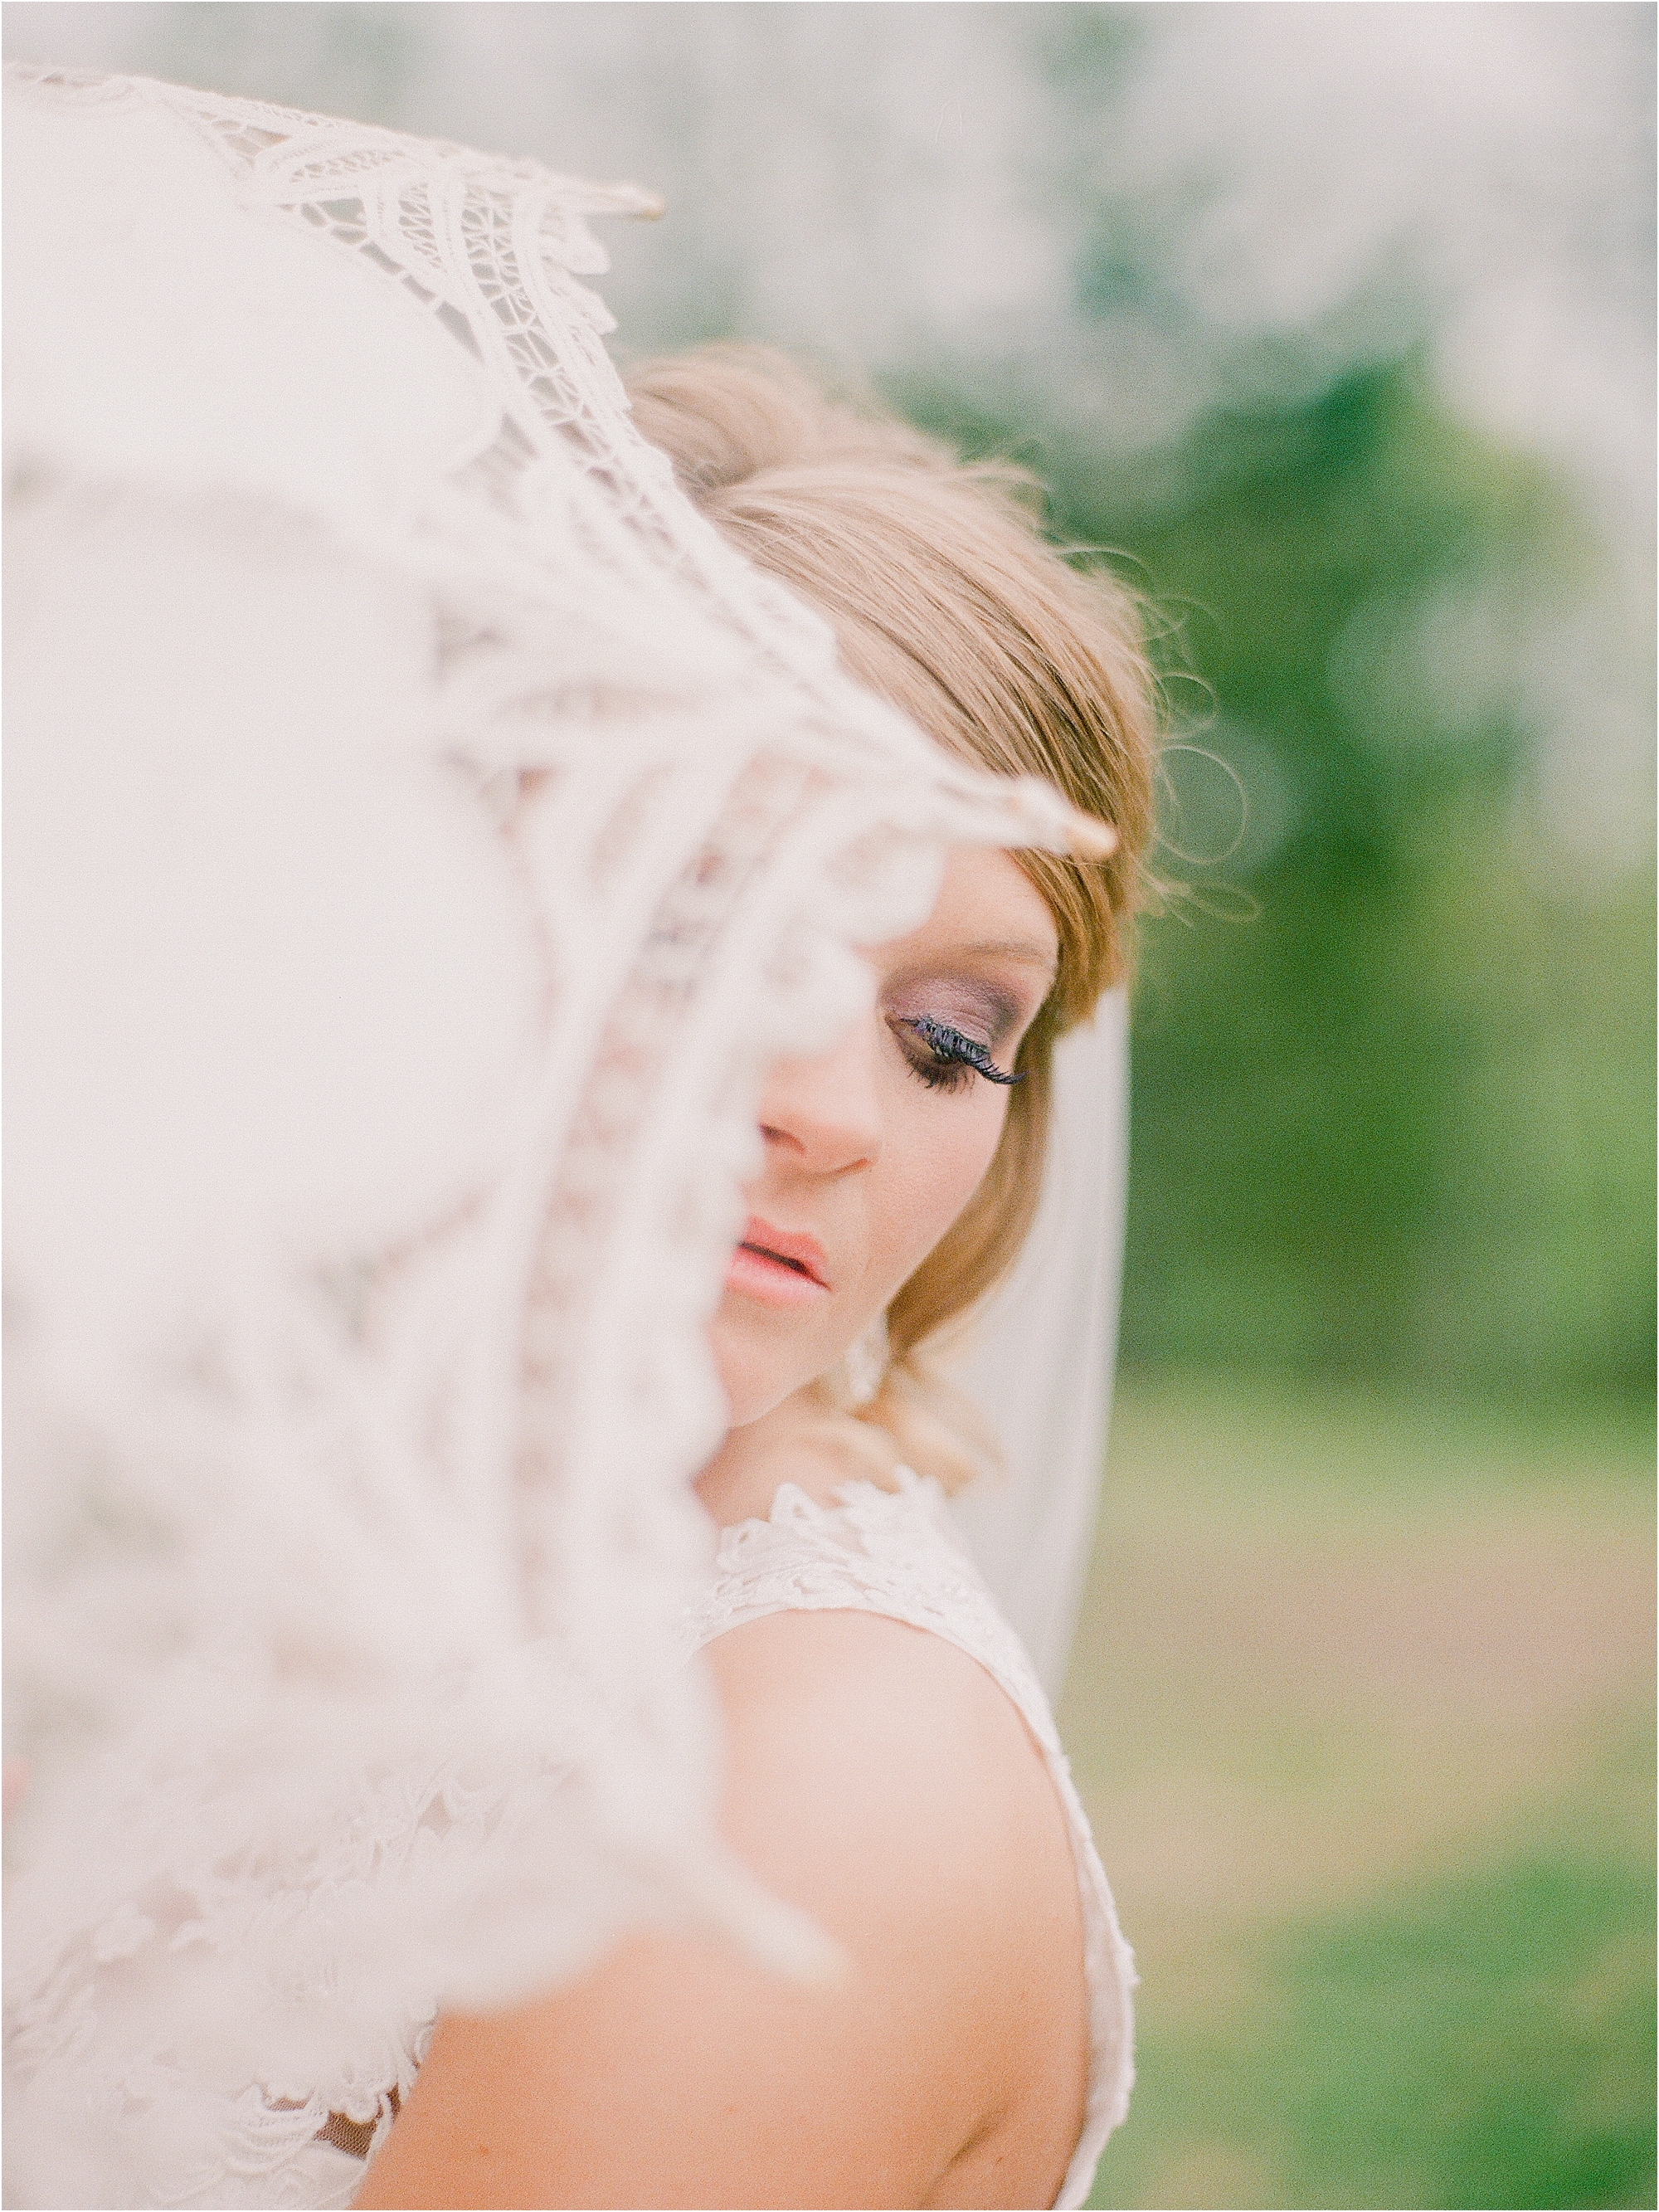 Bolivar Missouri Wedding - Jordan Brittley Photography